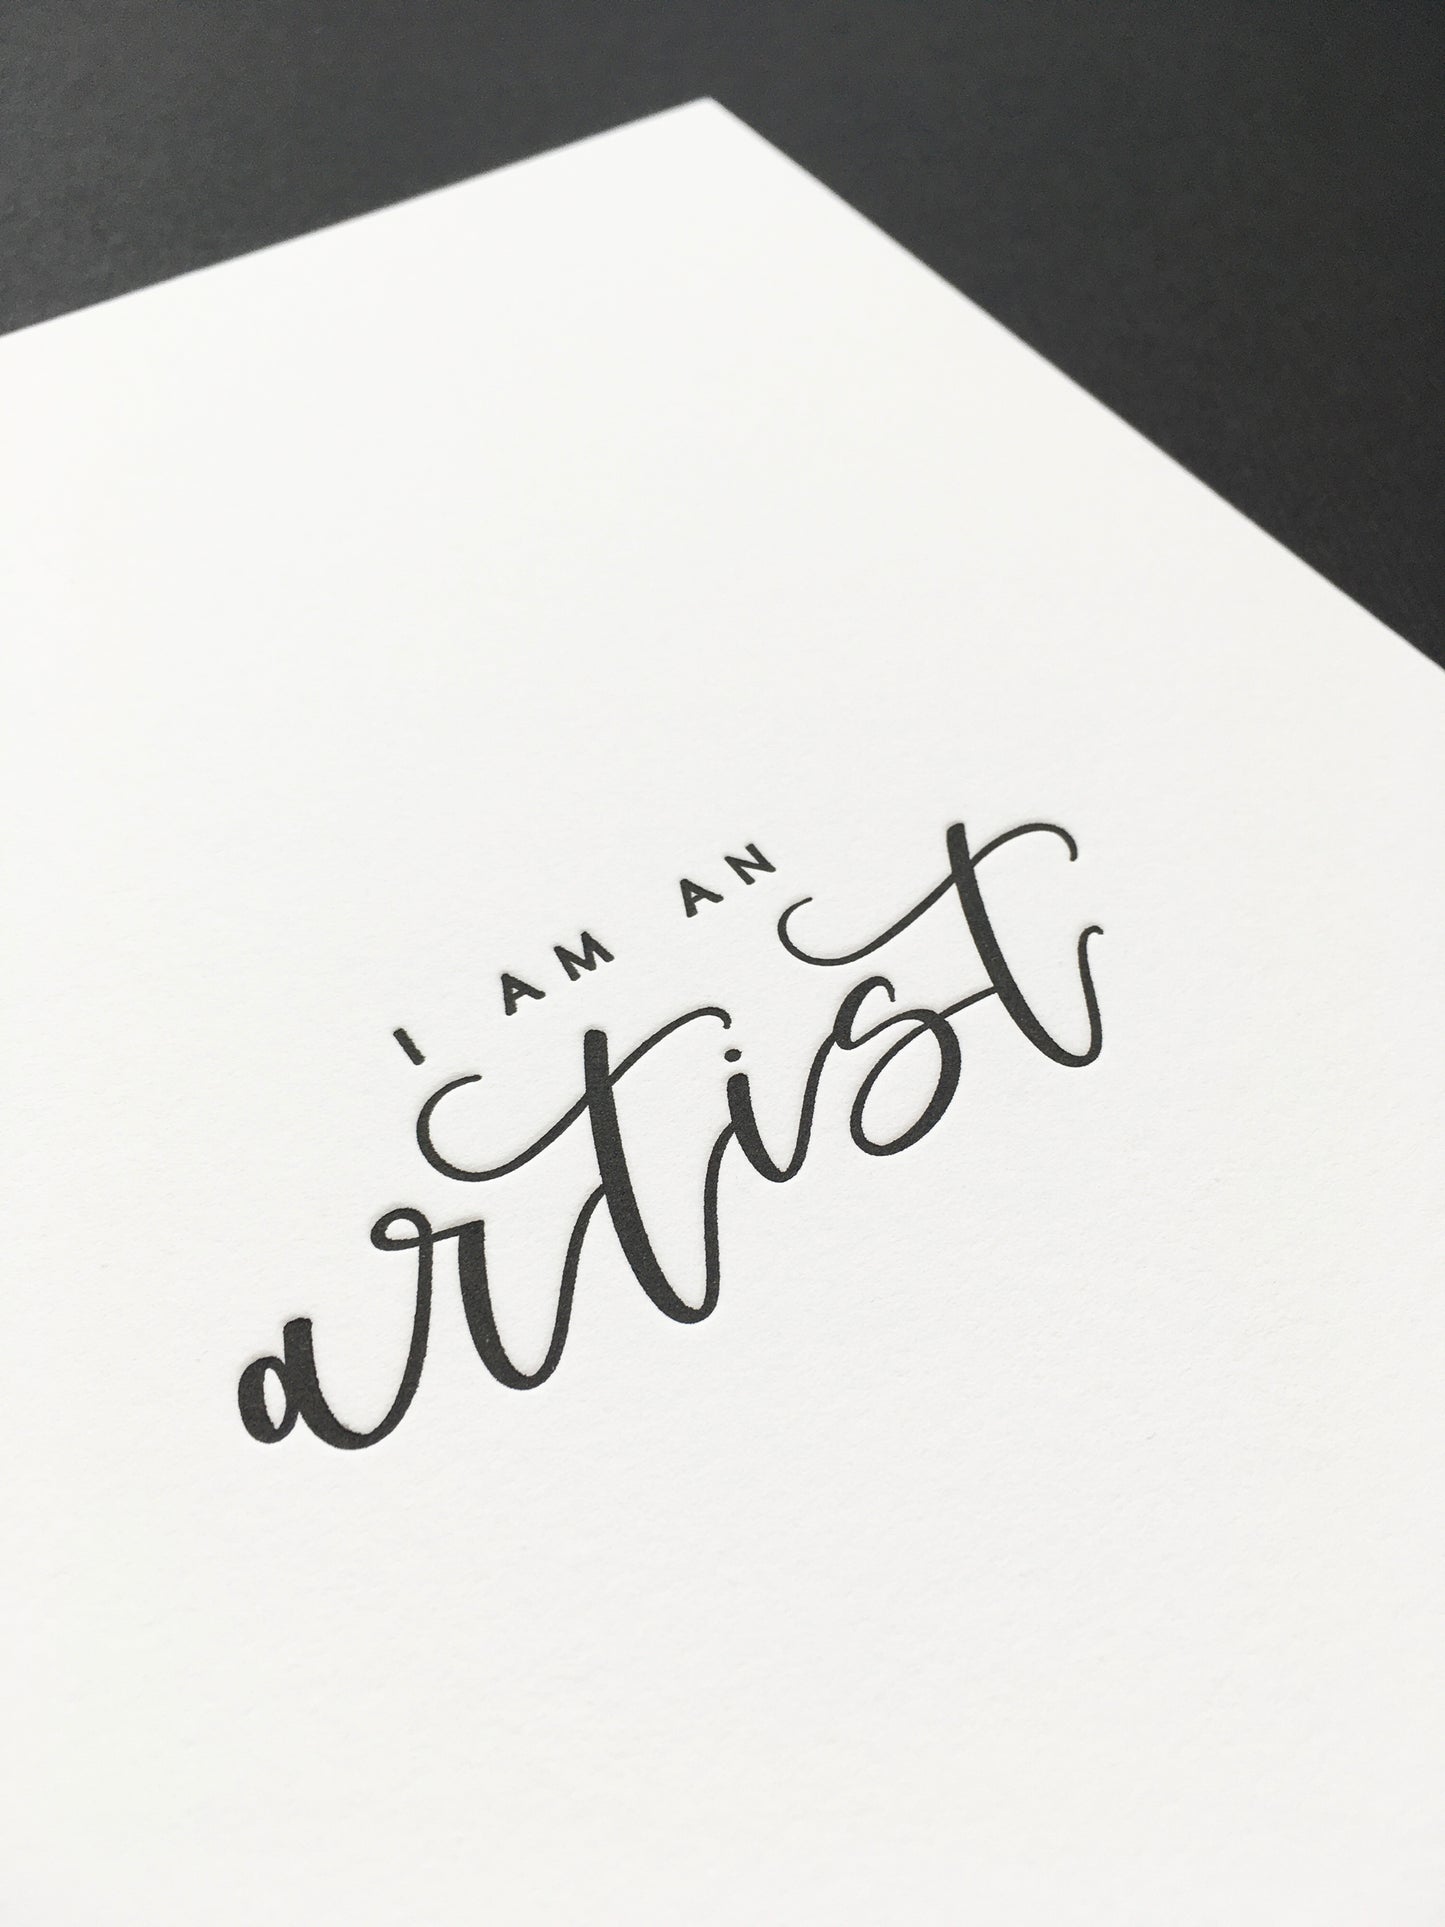 I Am An Artist Interactive Letterpress Print - Add Your Own Mark!